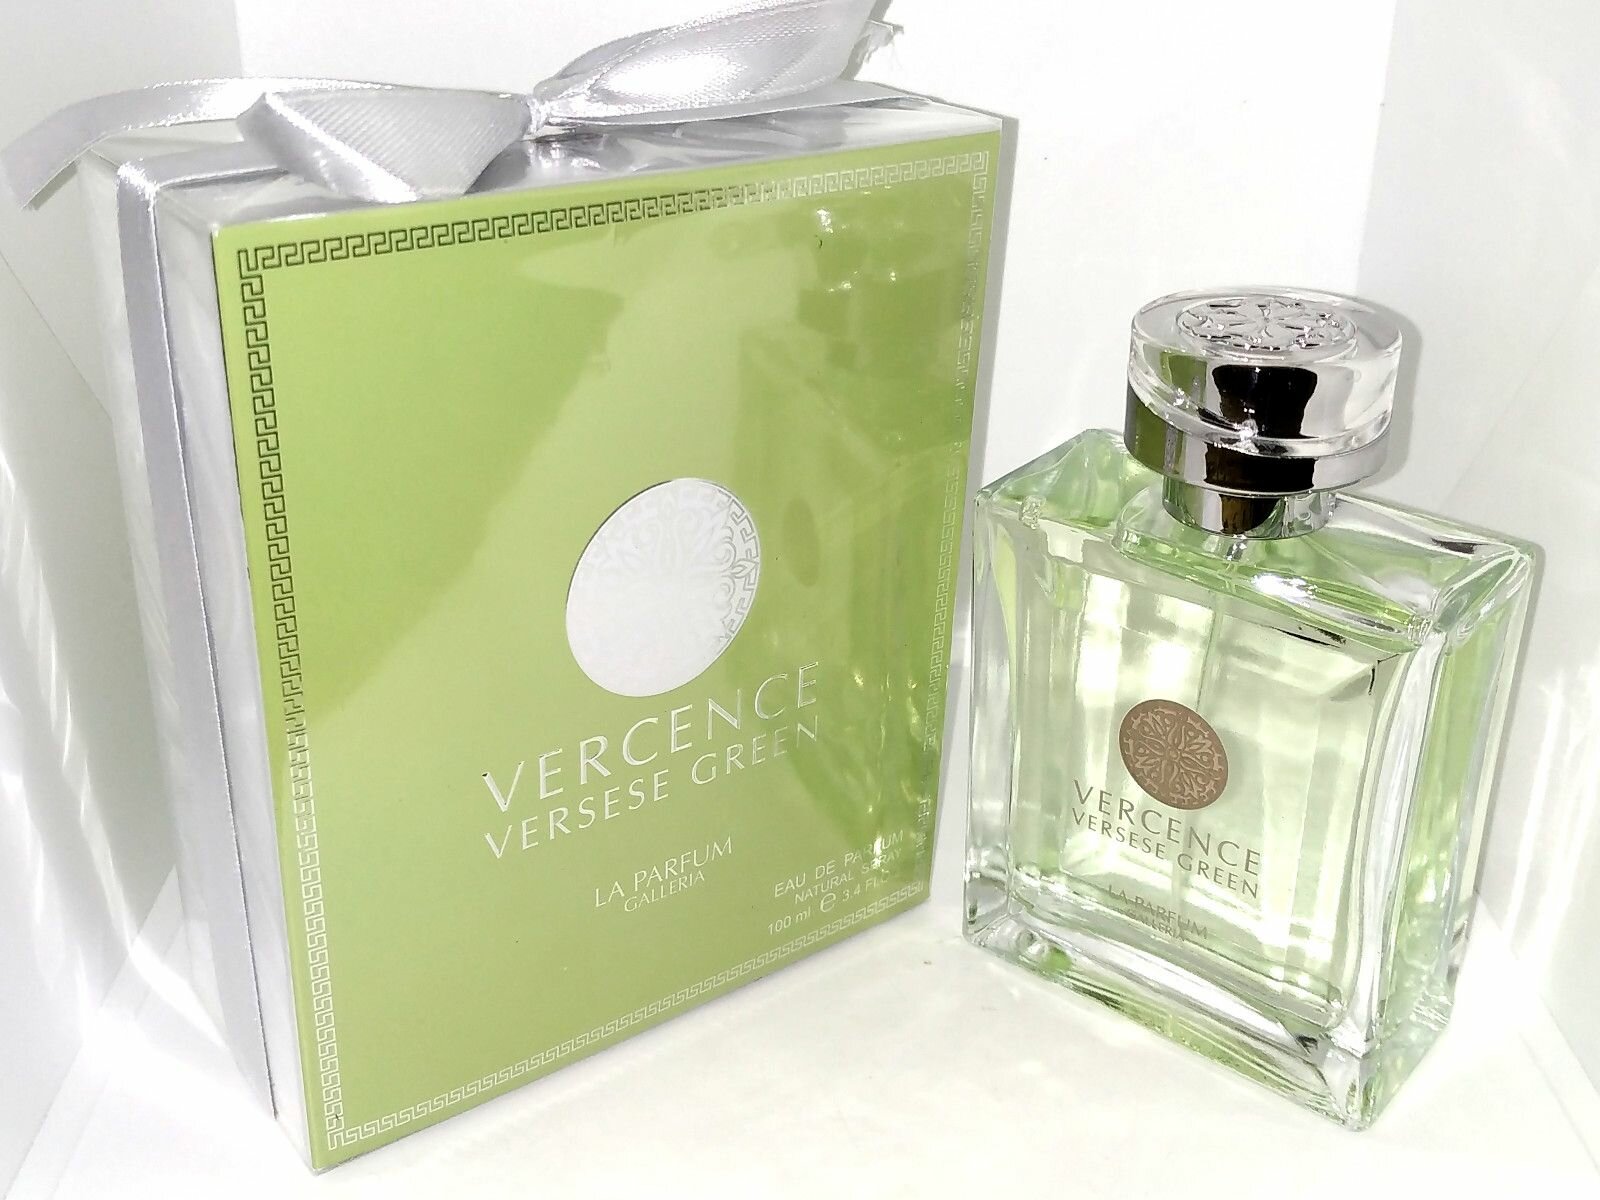 Духи женские La Parfum Galleria Verscene Versel Green, 100 ml